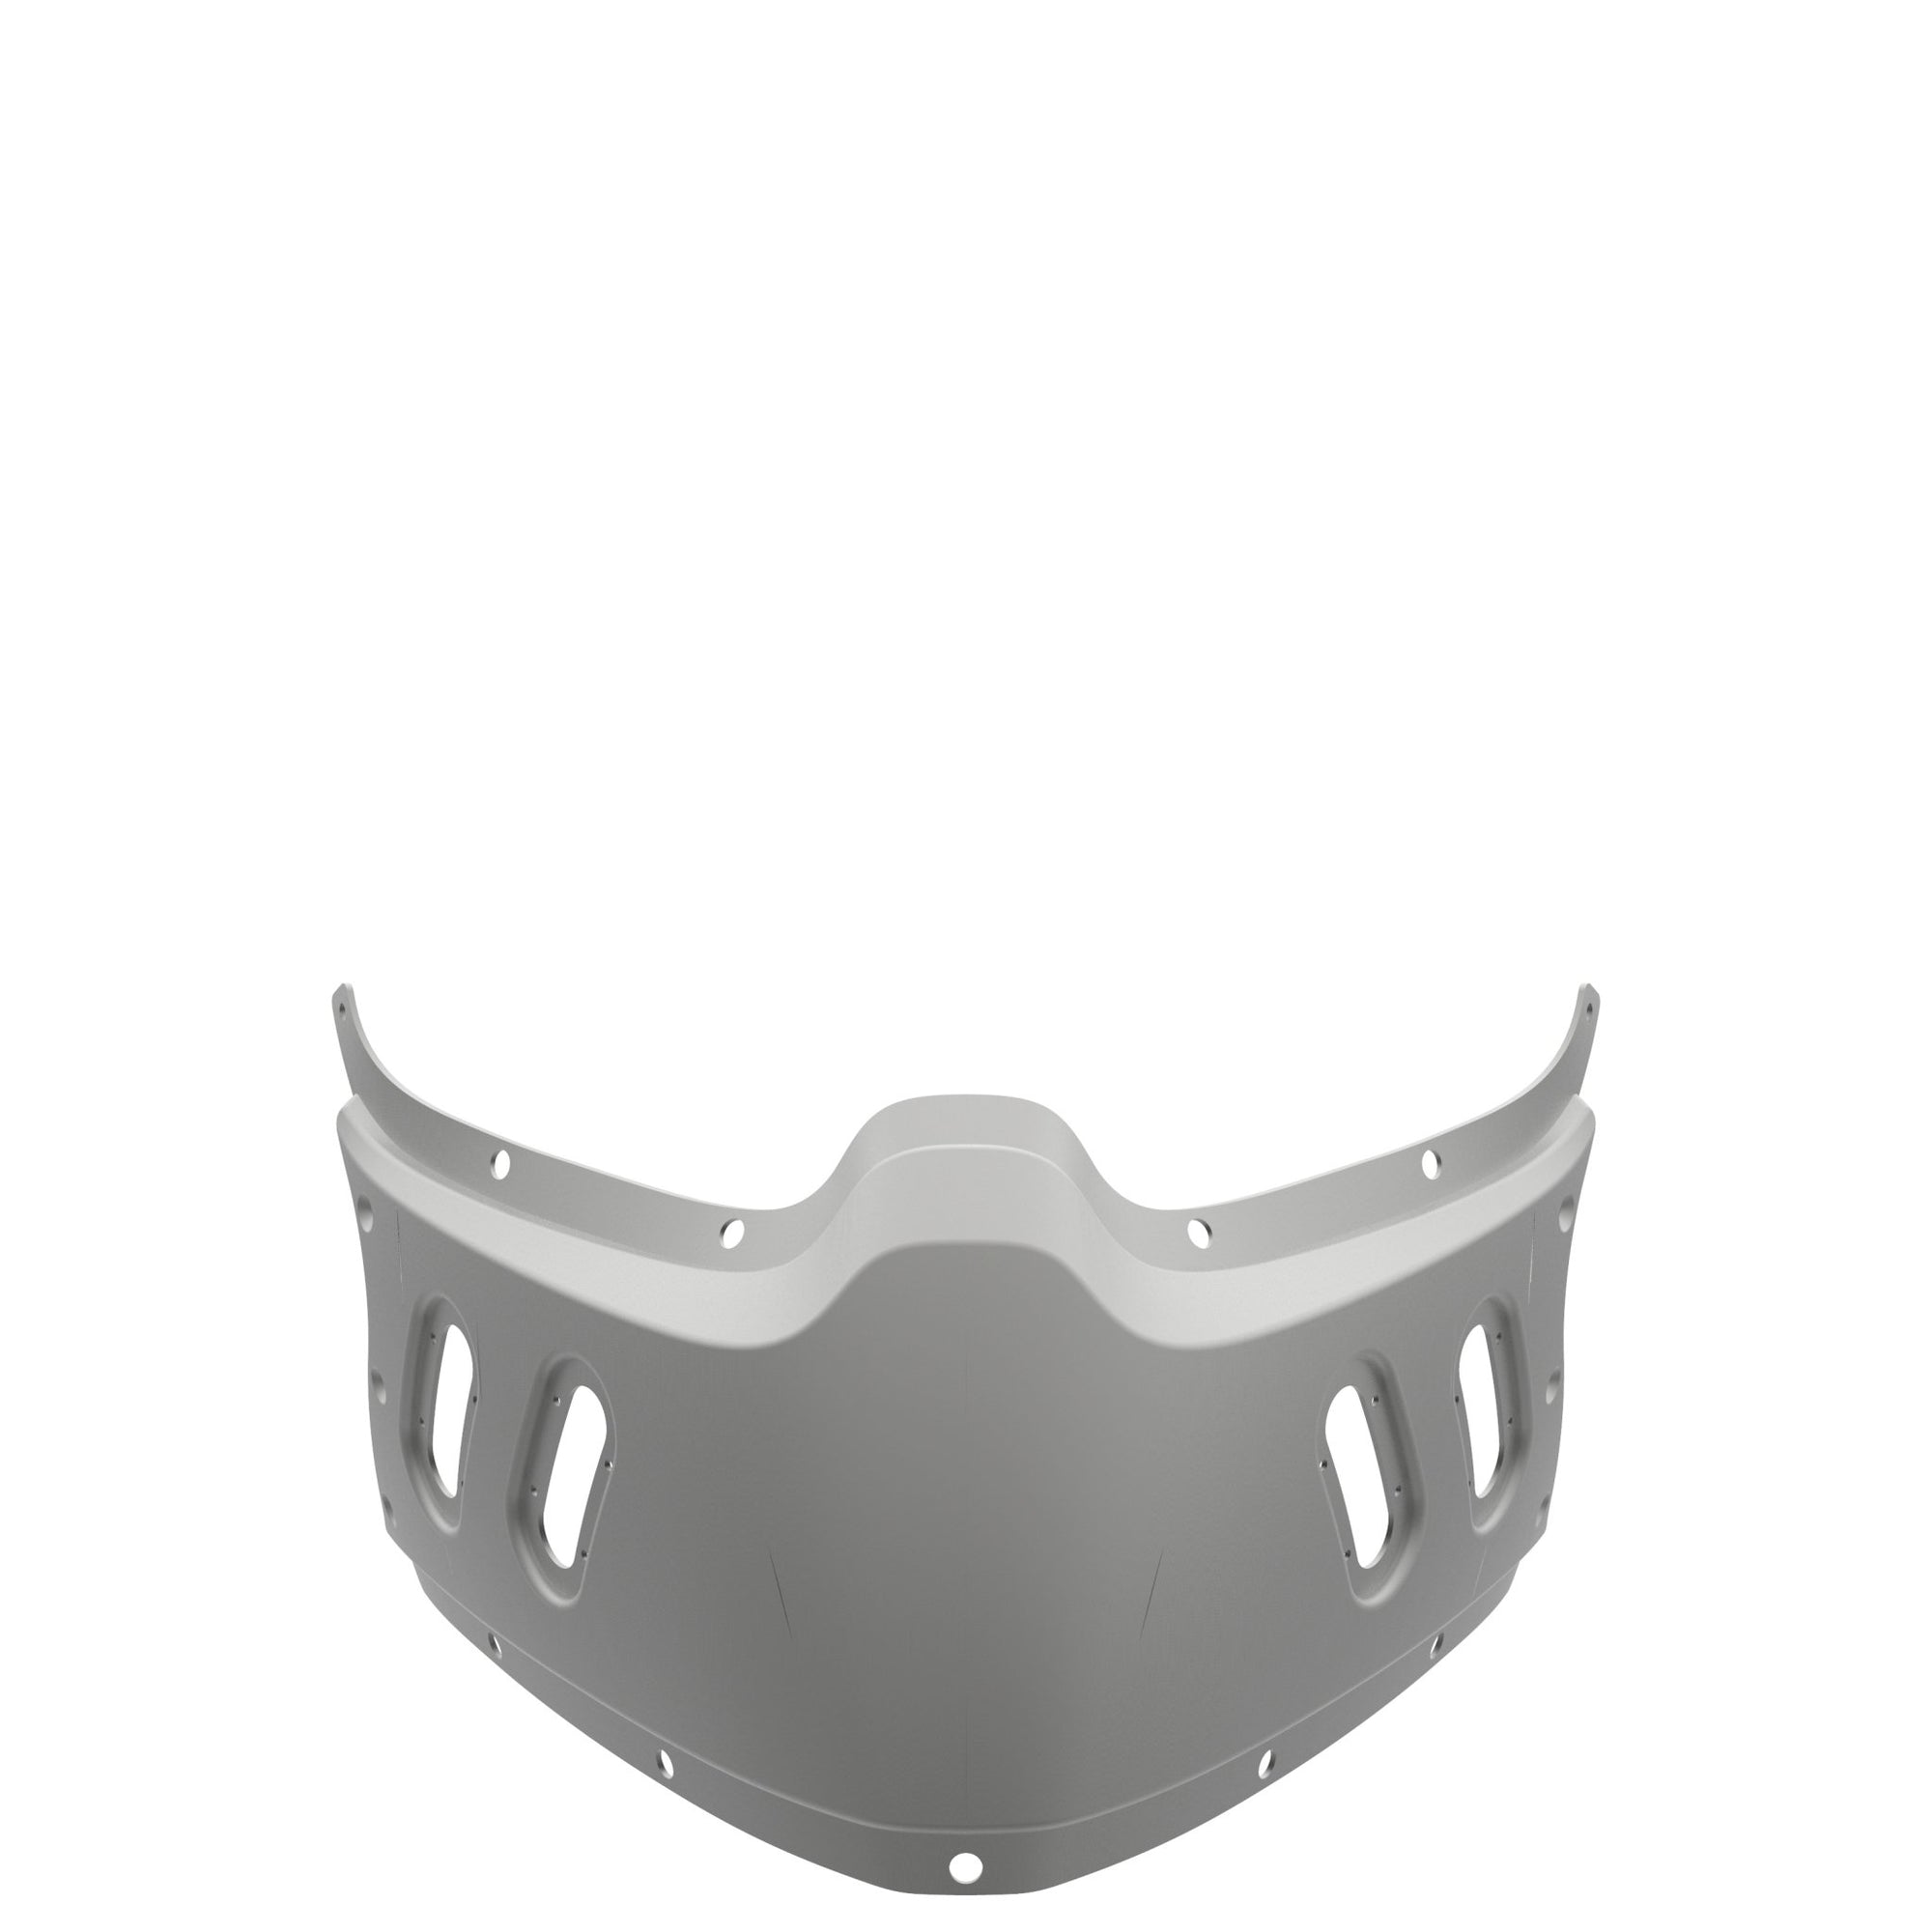 Qwart - Qwart Carbon Mask chin guard cover Accessory Kit for Phoenix Standard and Slick Helmets - Helmet Accessories - Salt Flats Clothing